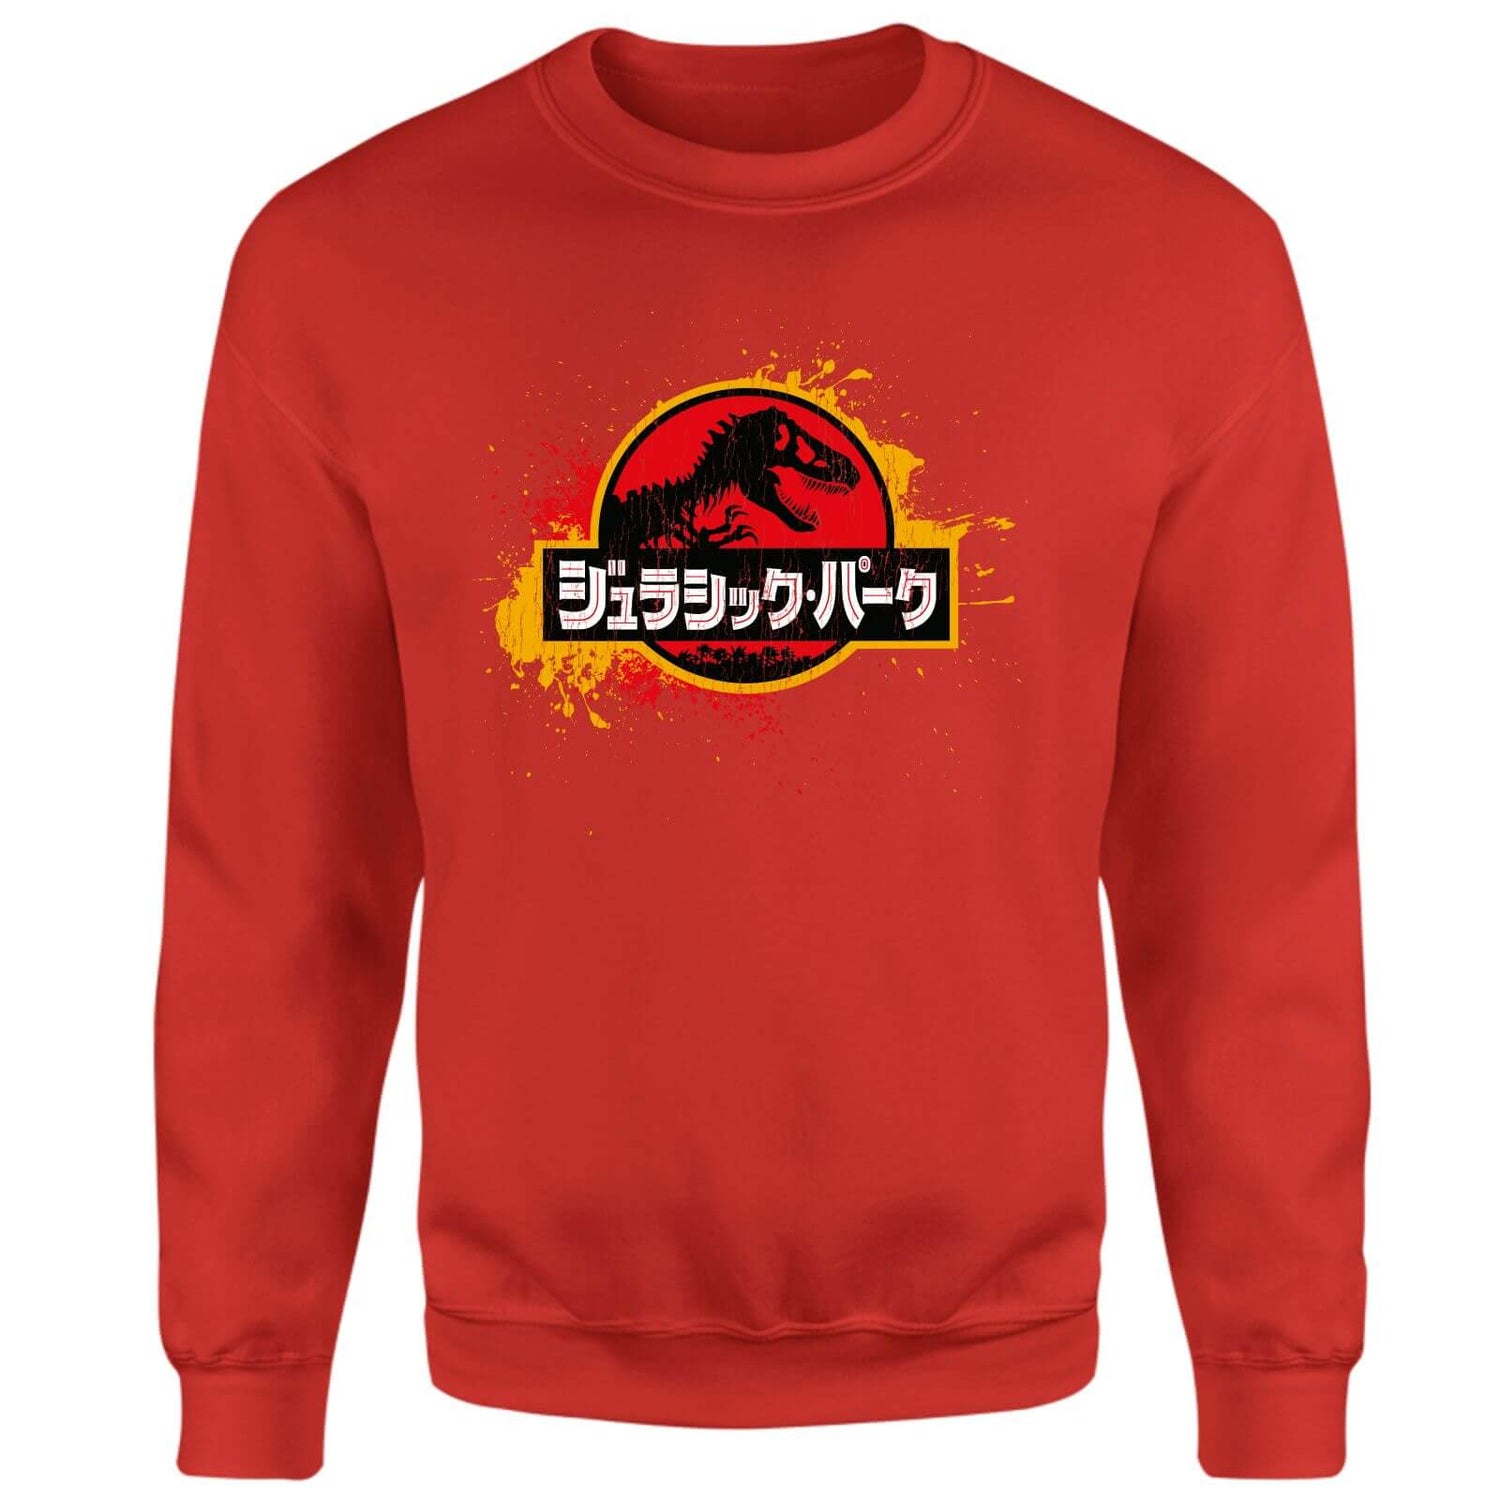 Jurassic Park Sweatshirt - Red